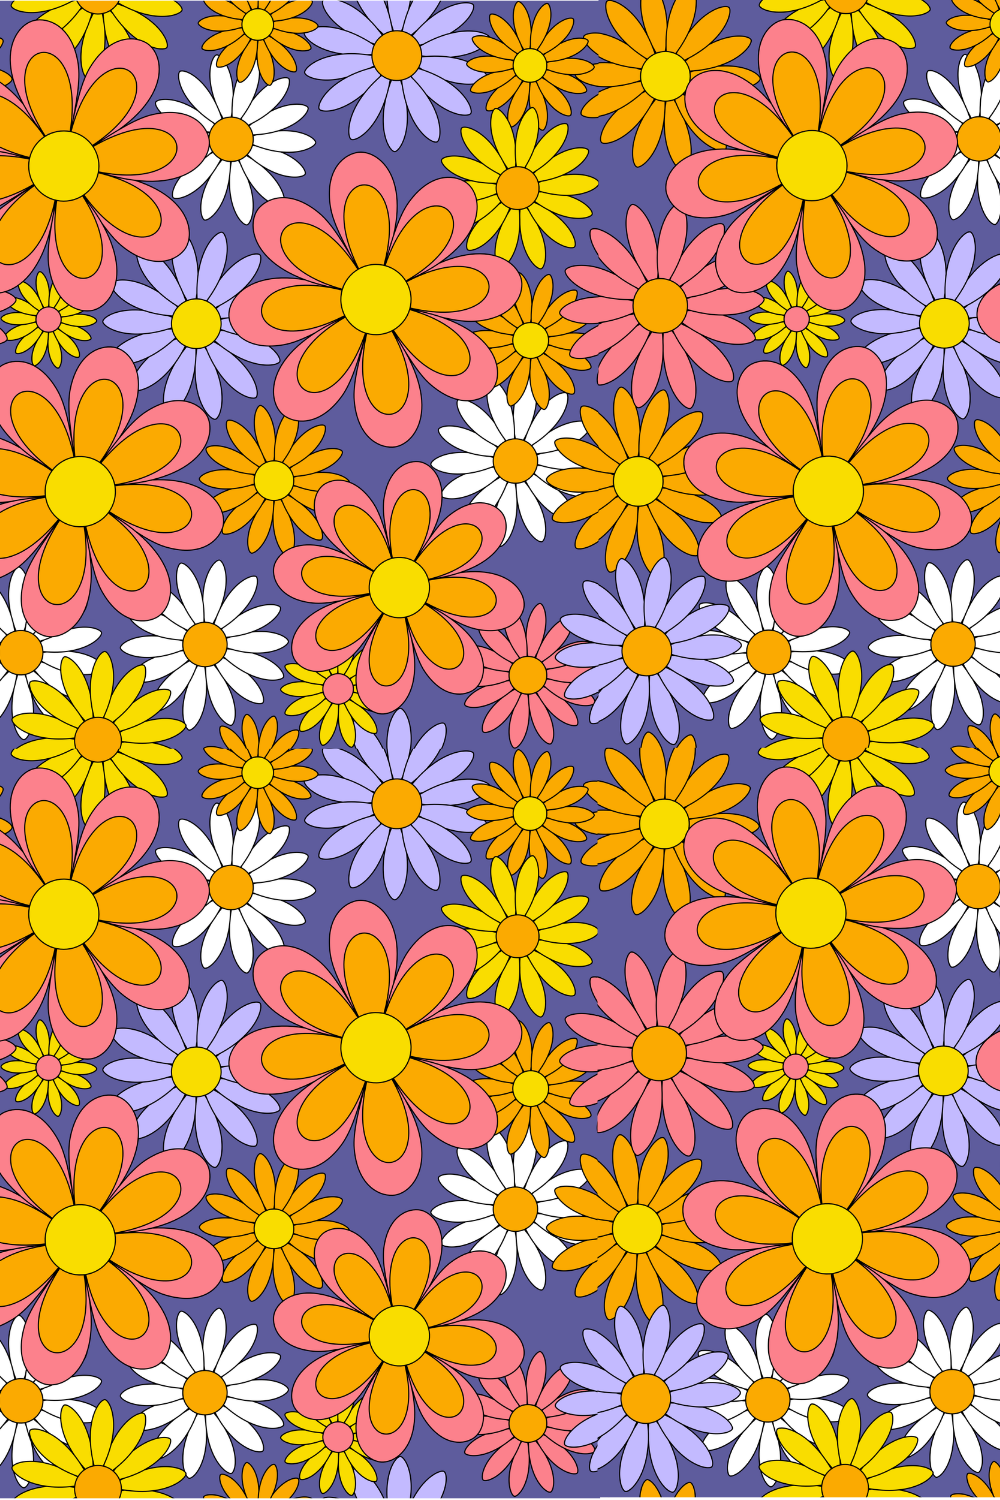 emily retro 70s floral (Copy)